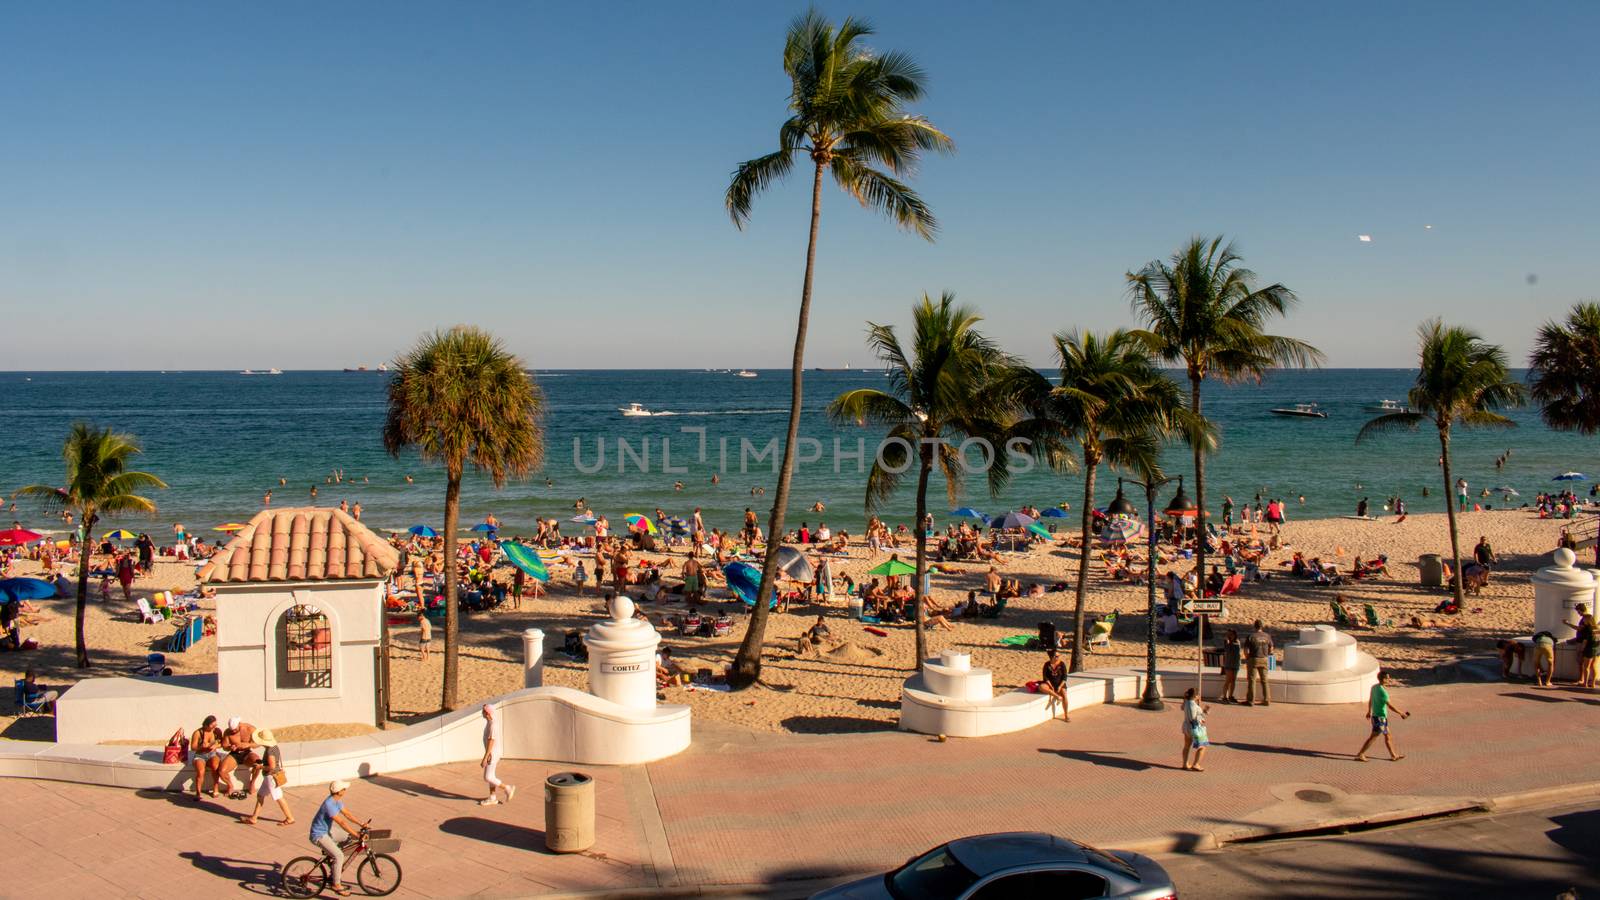 An High Angle View of a Busy Tropical Beach Scene